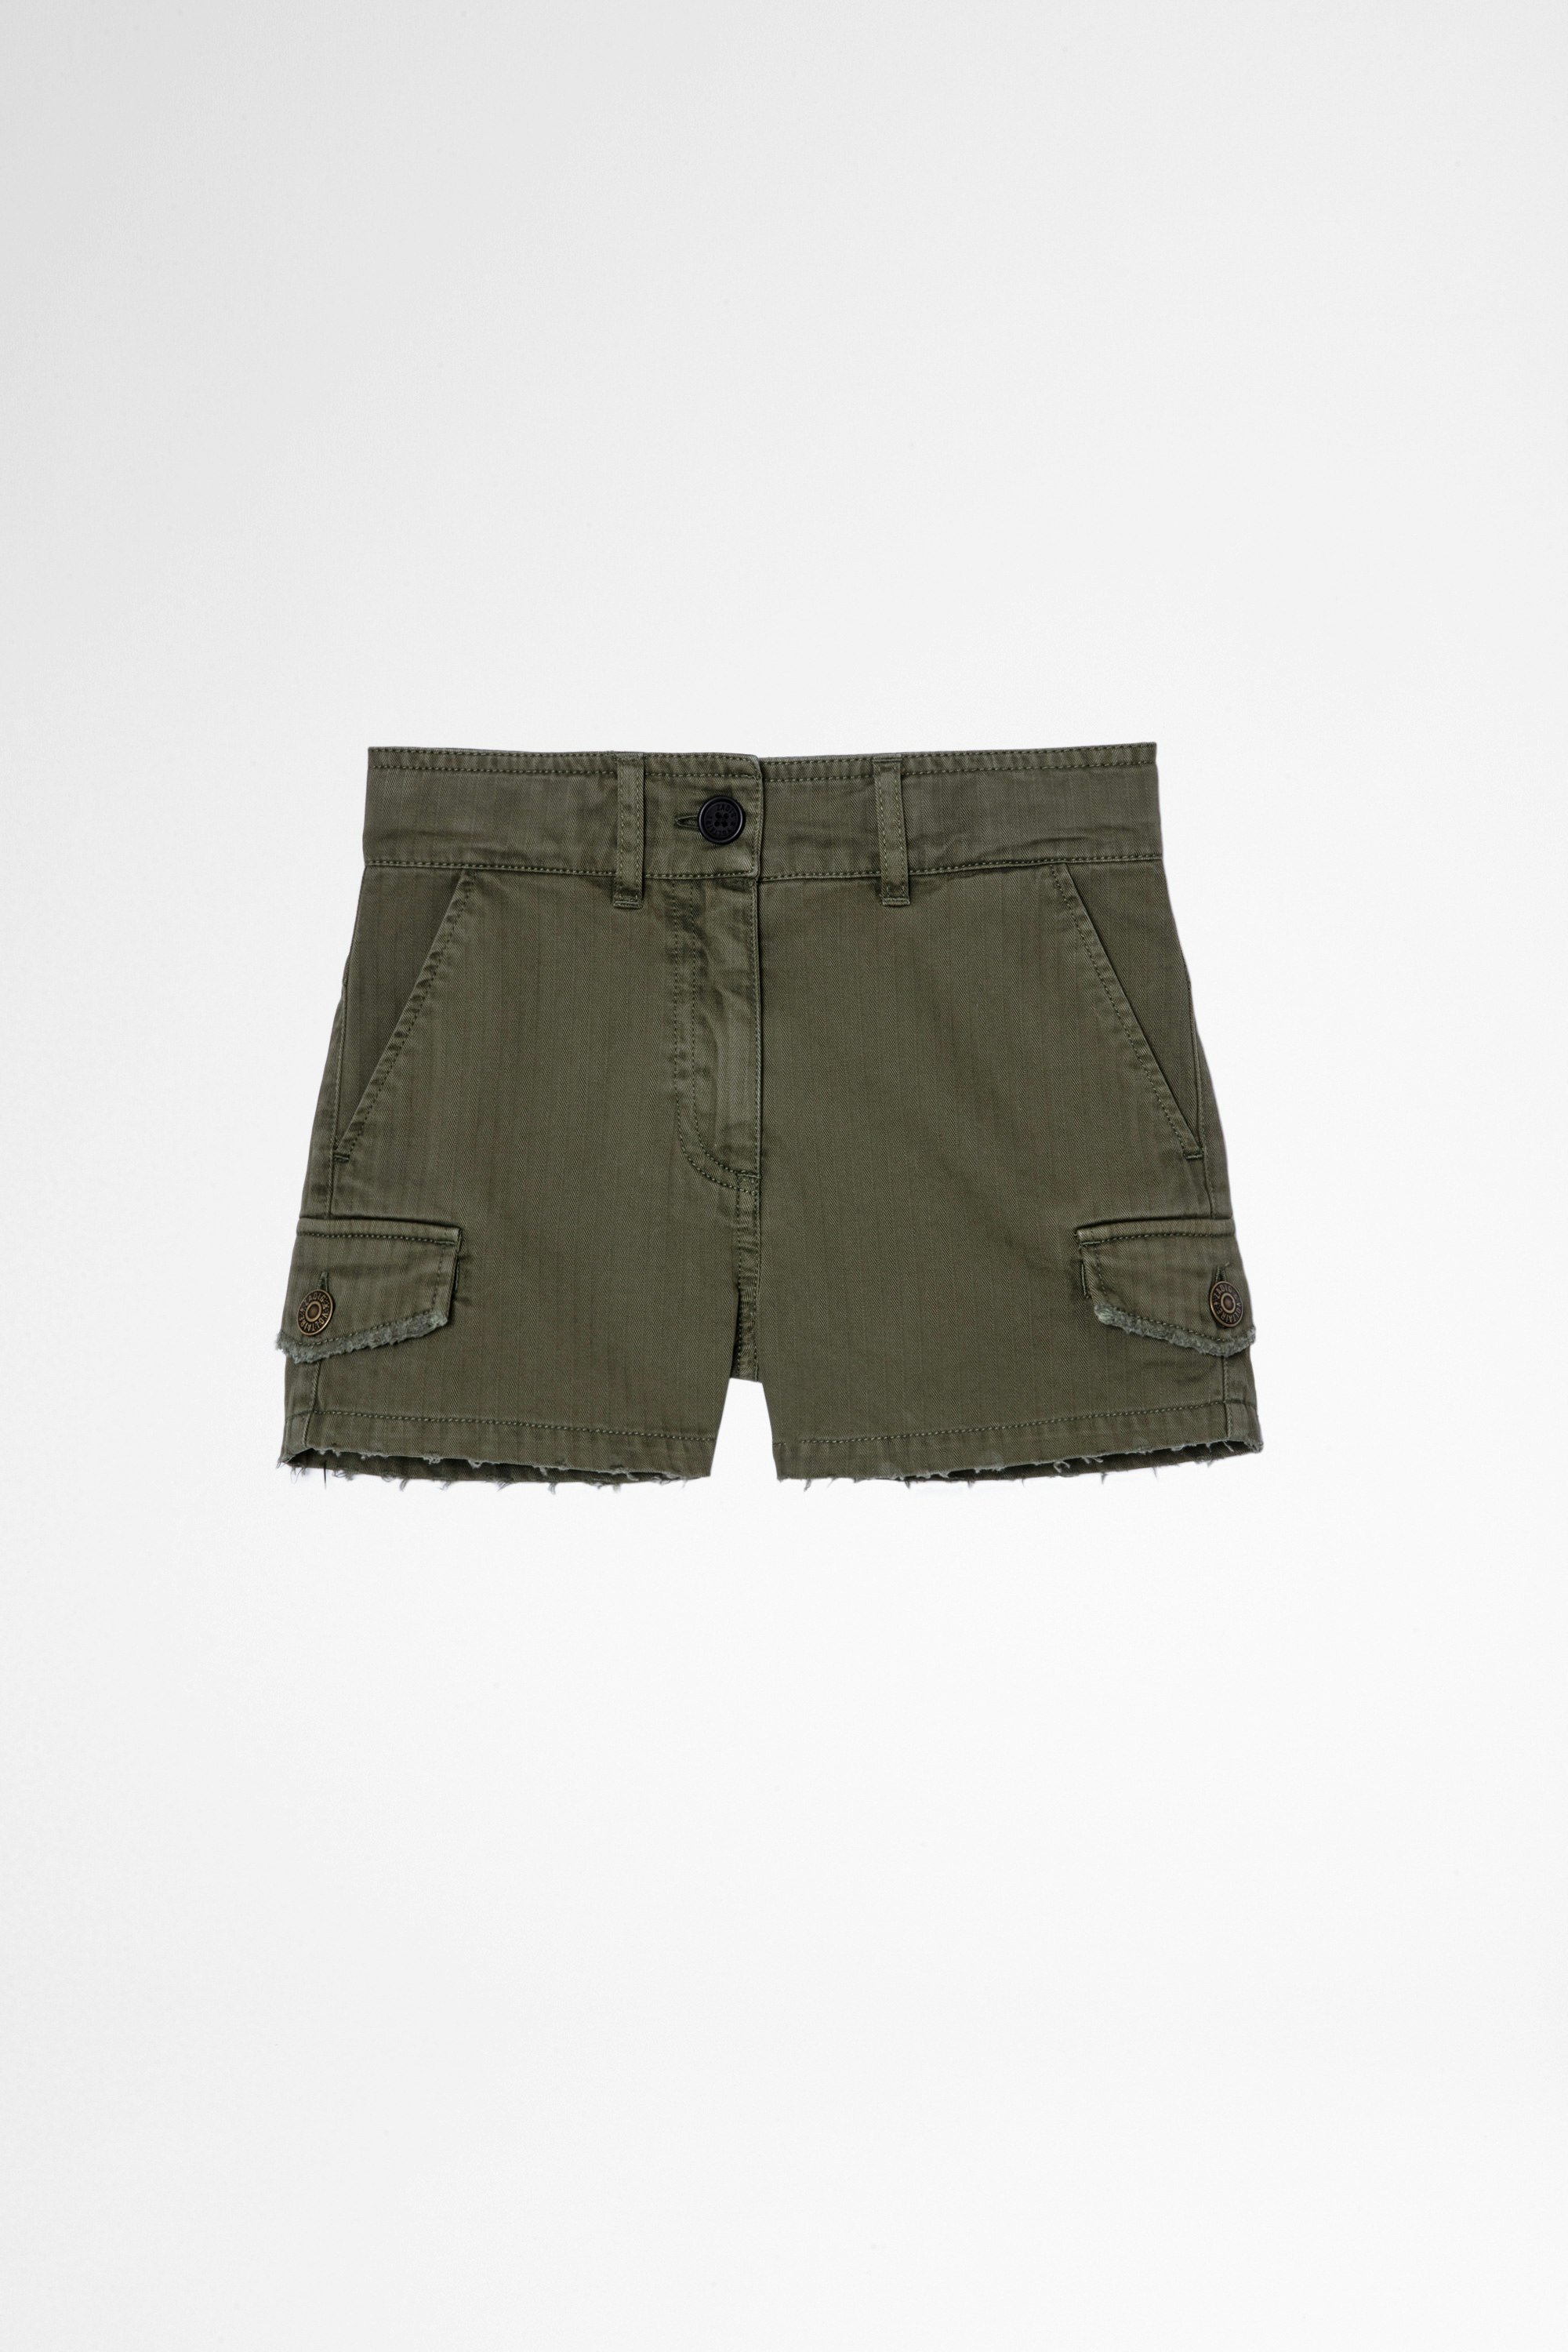 Sienna Children's ショーツ Children's army shorts